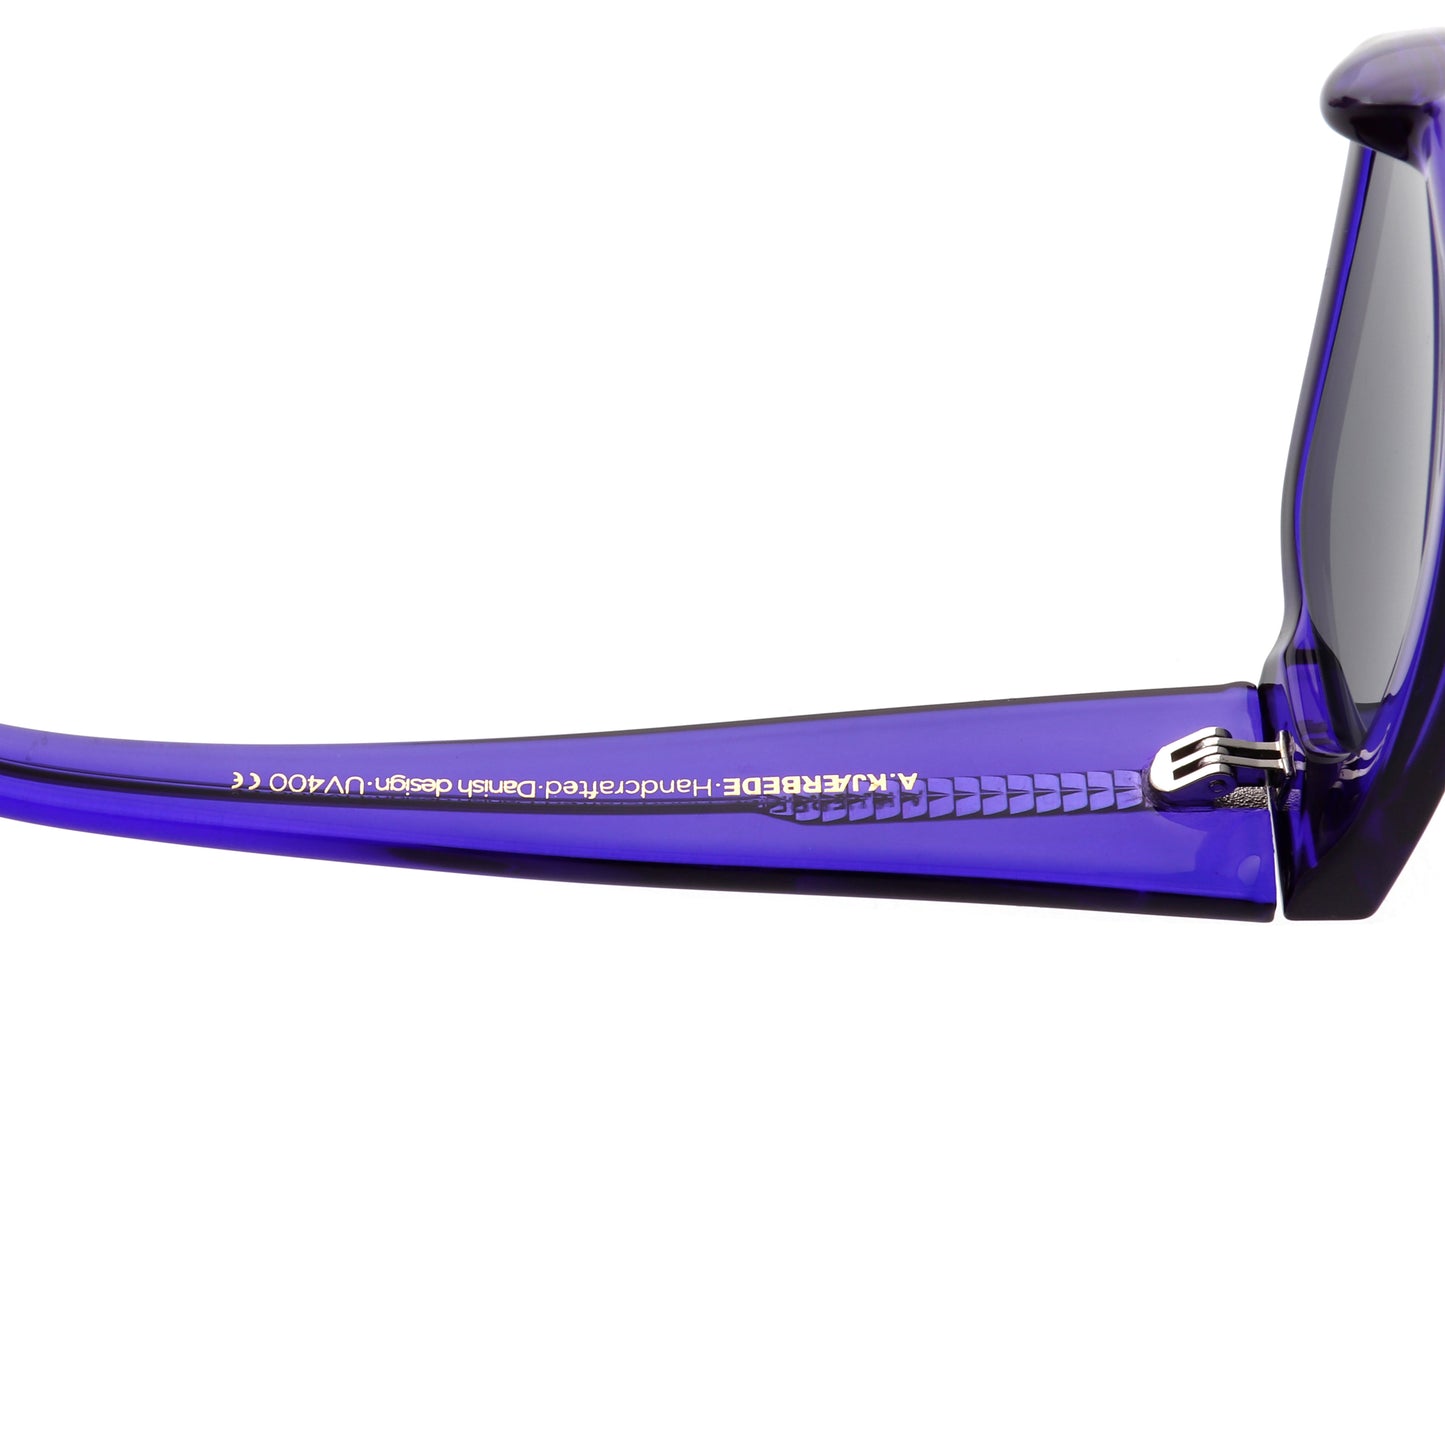 A.Kjaerbede Jean Sunglasses in Purple Transparent color